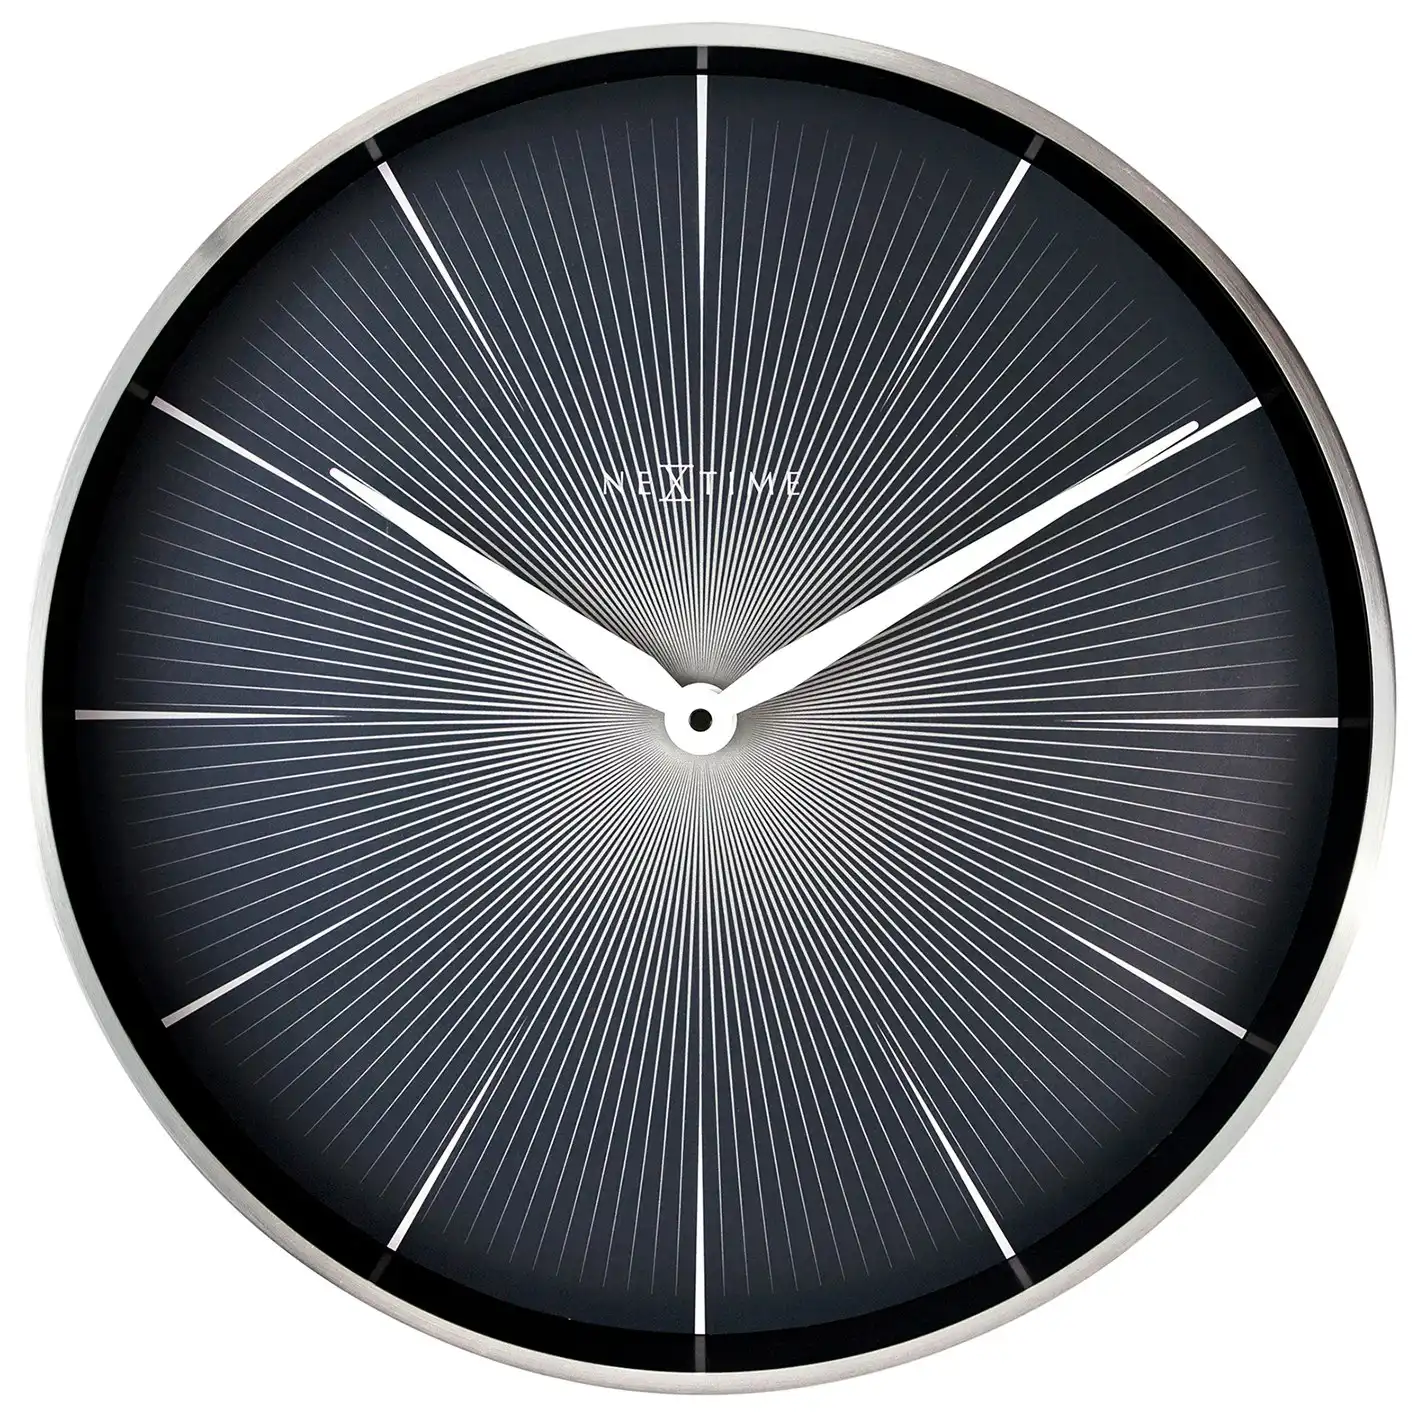 NeXtime 40cm 2 Seconds Silent Non-Ticking Round Analogue Metal Wall Clock Black